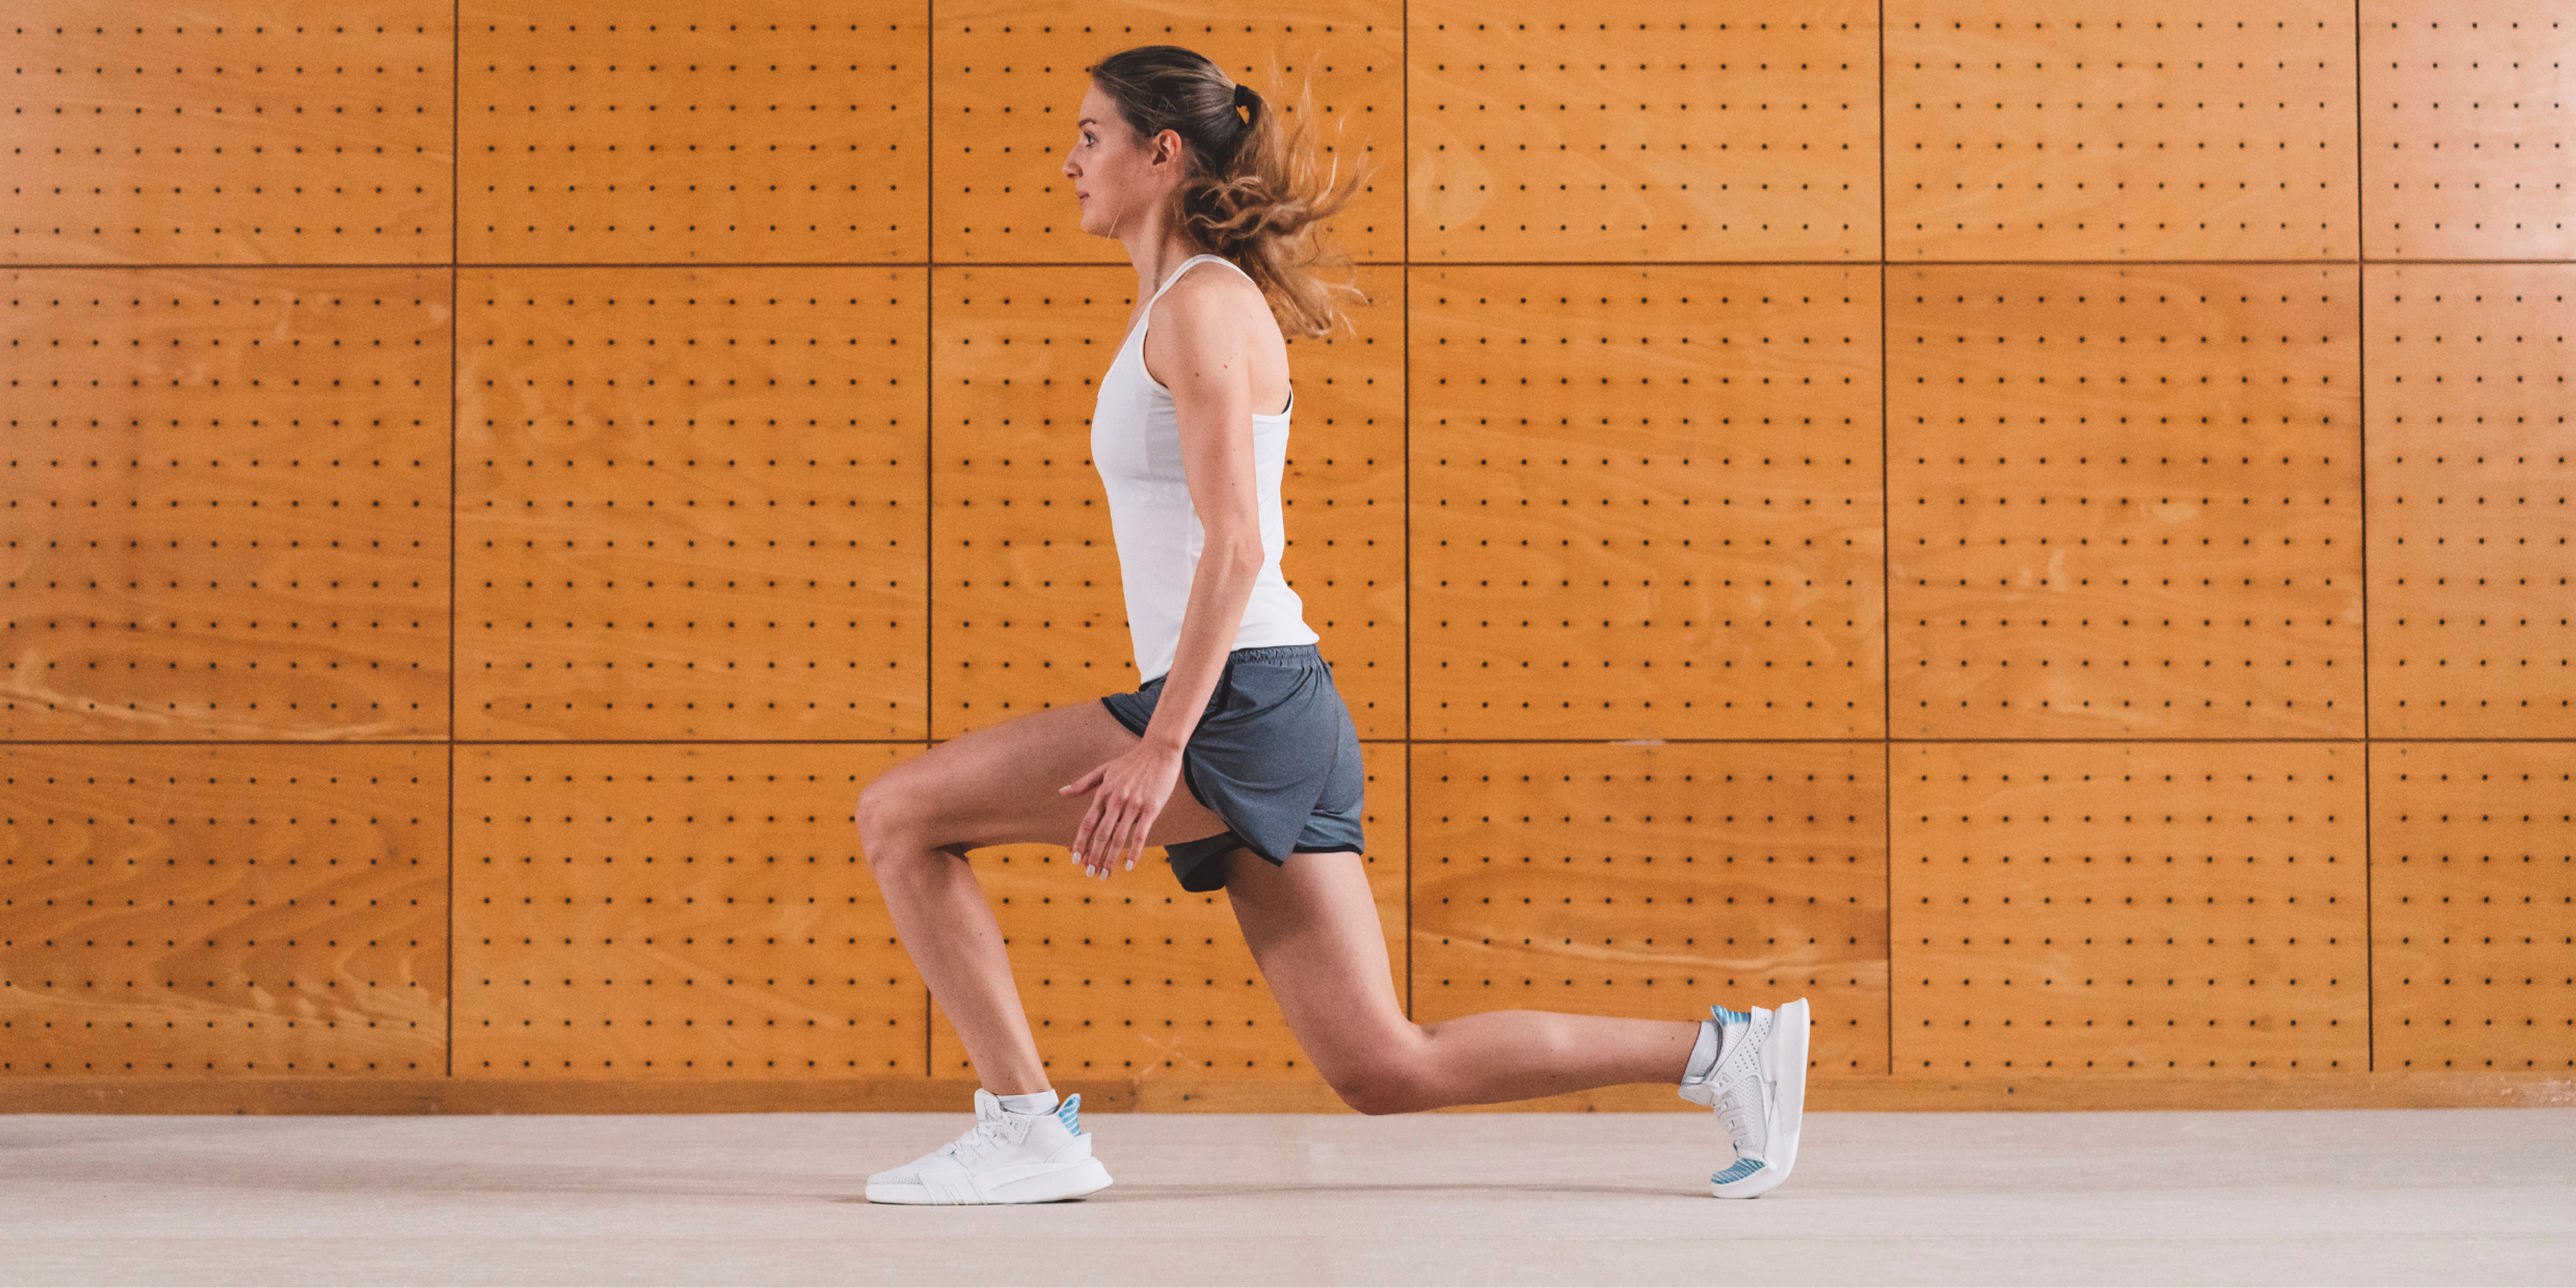 Exercises for ankle sprain to progress your rehab